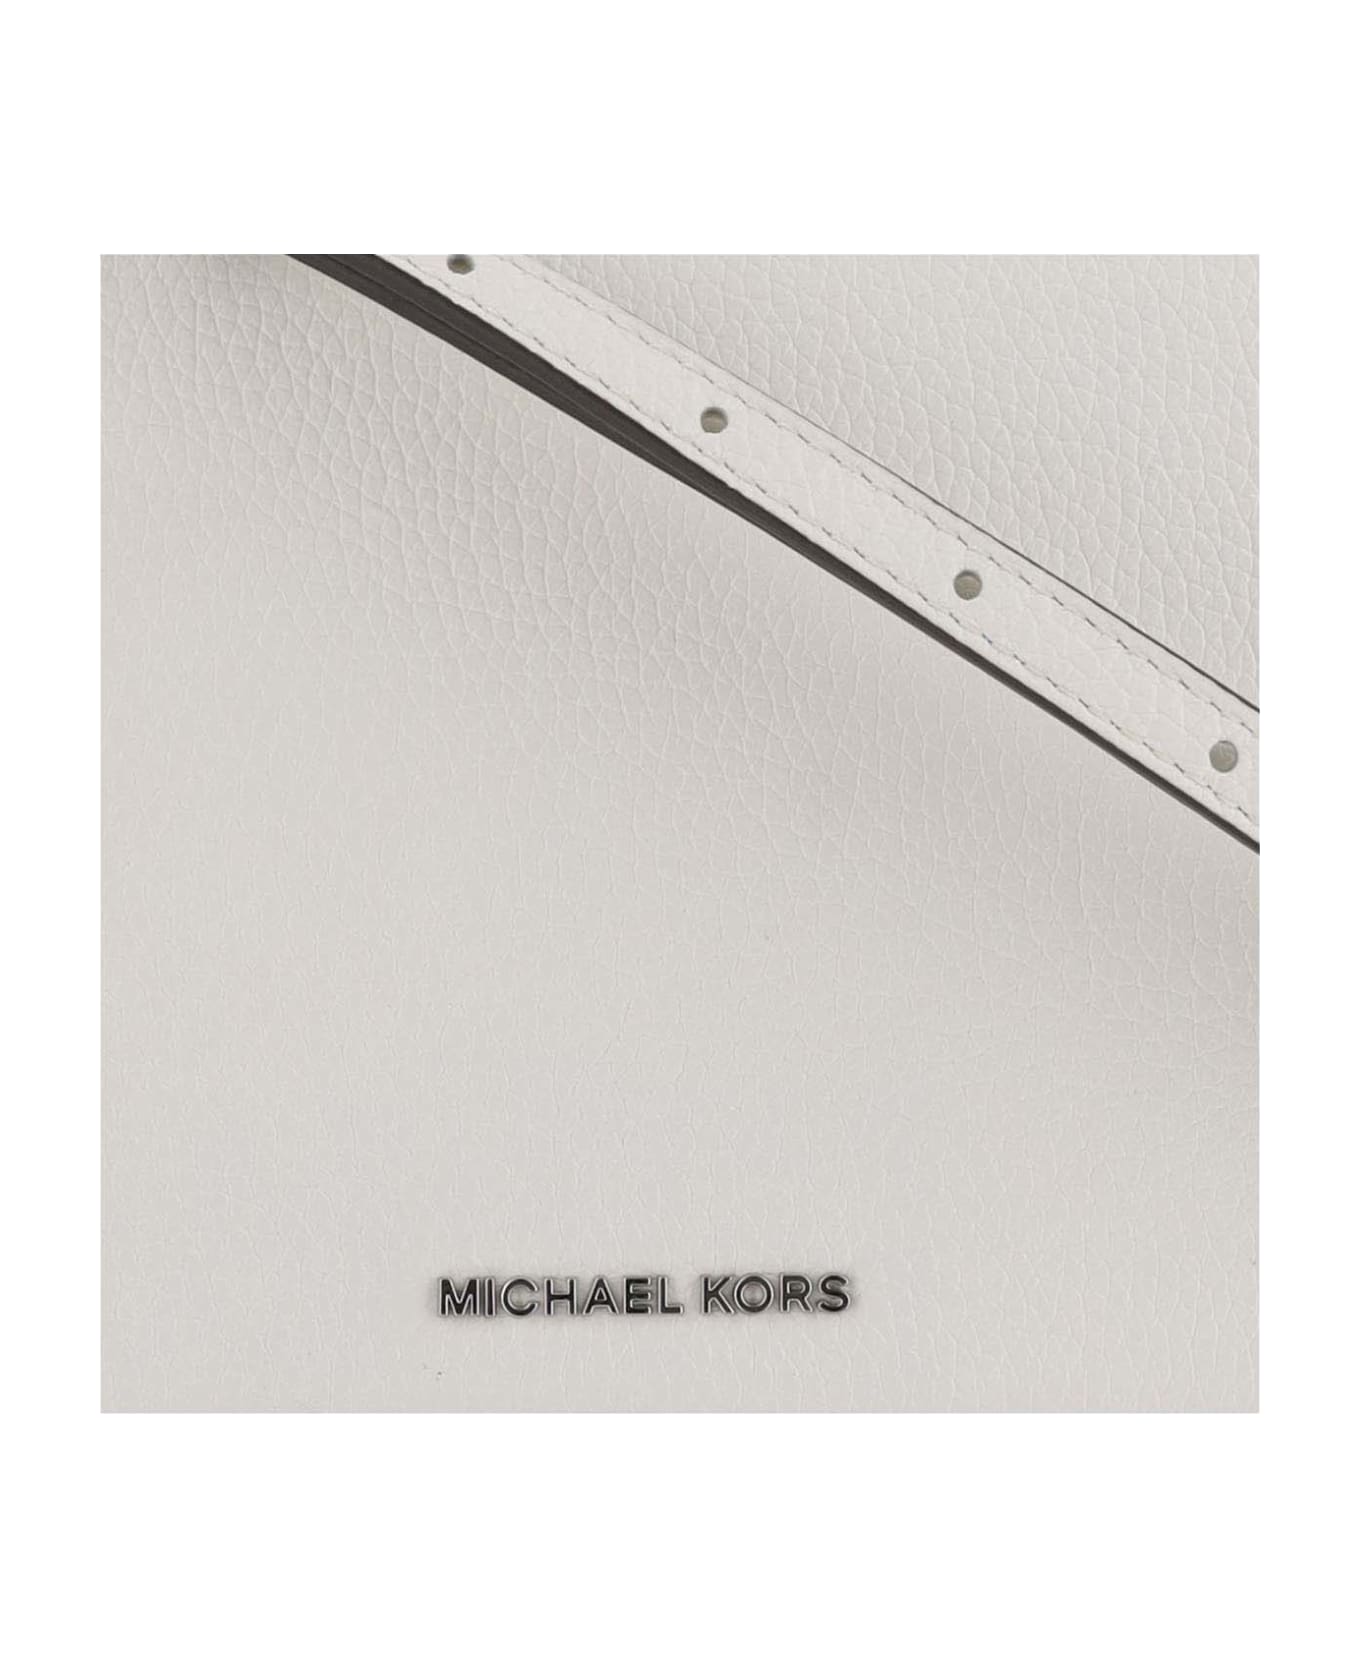 Michael Kors Leather Shoulder Bag With Logo - Optic white